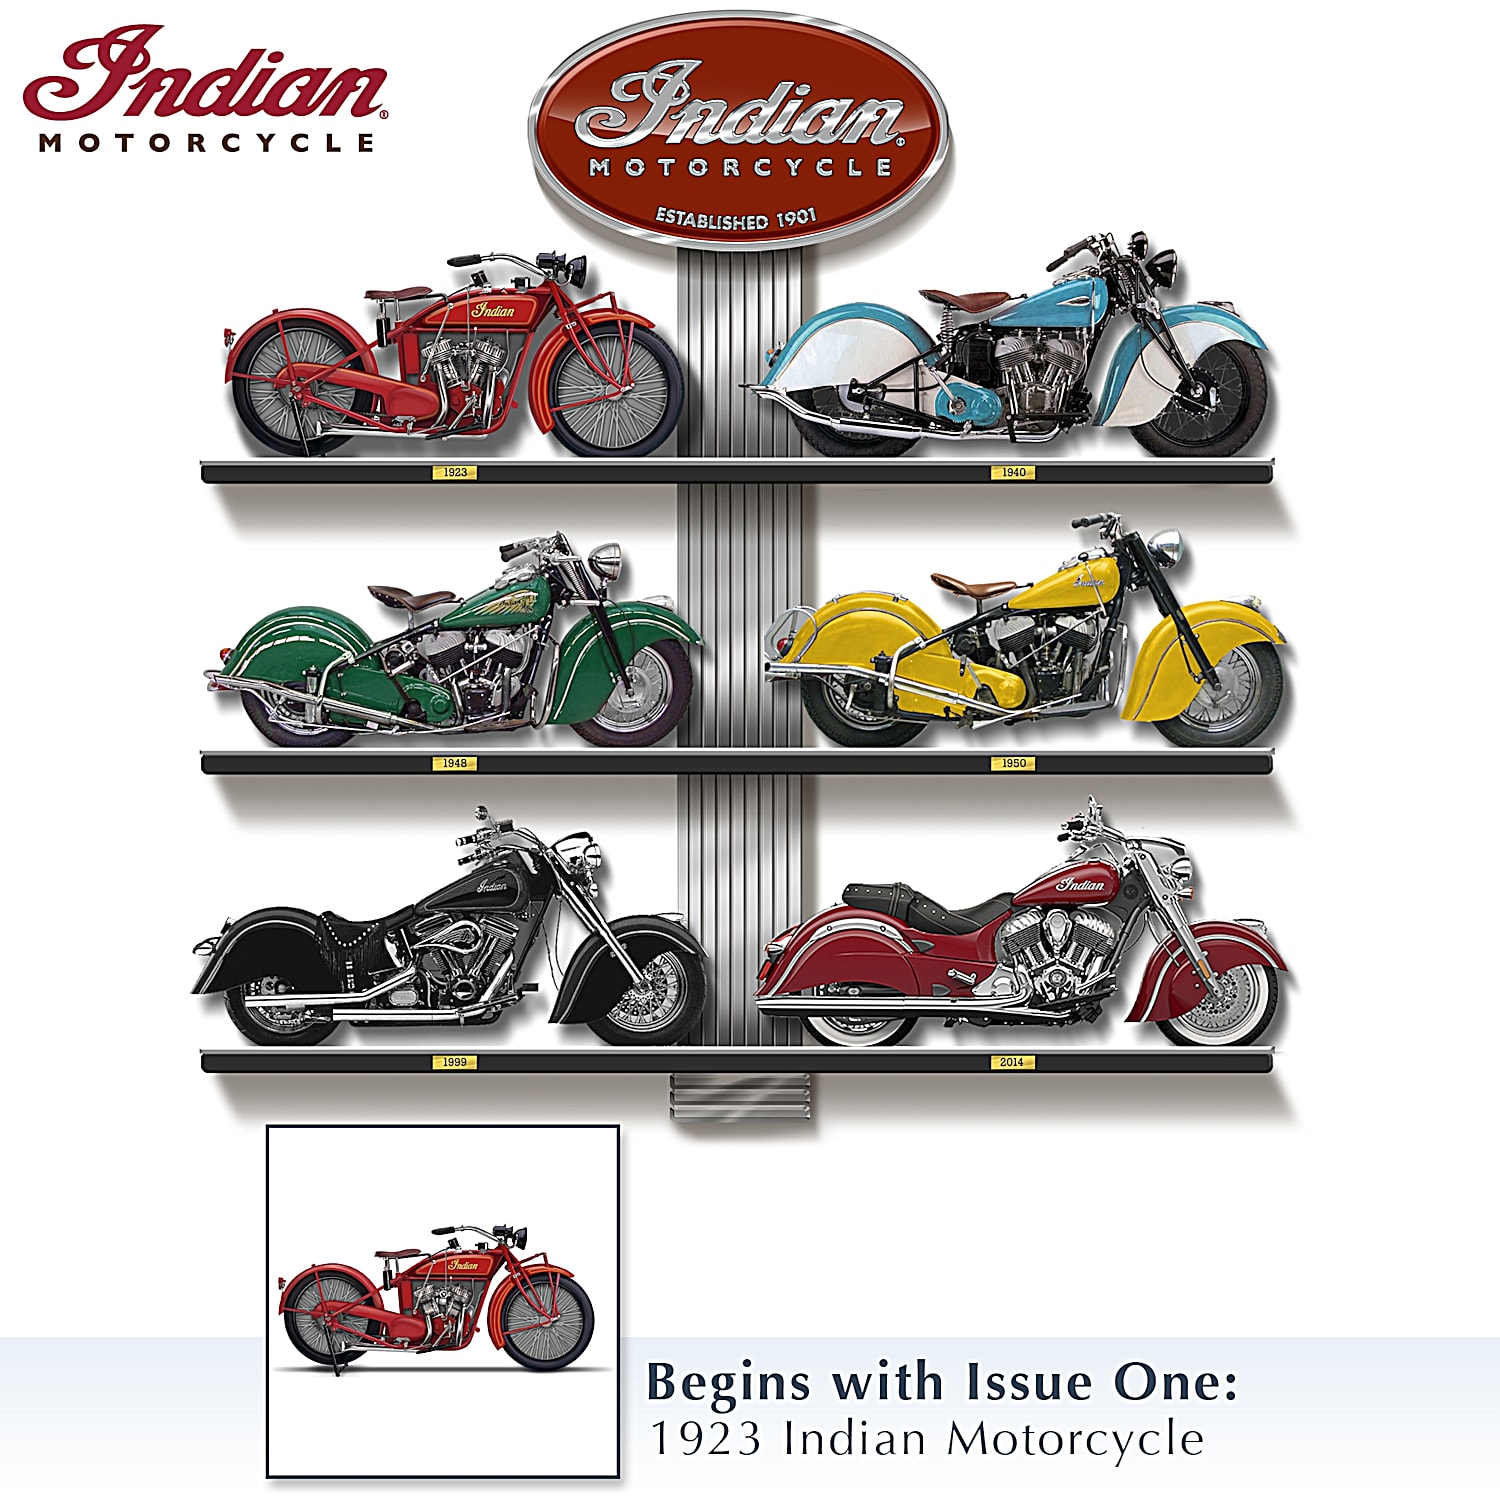 Historical motorcycle models